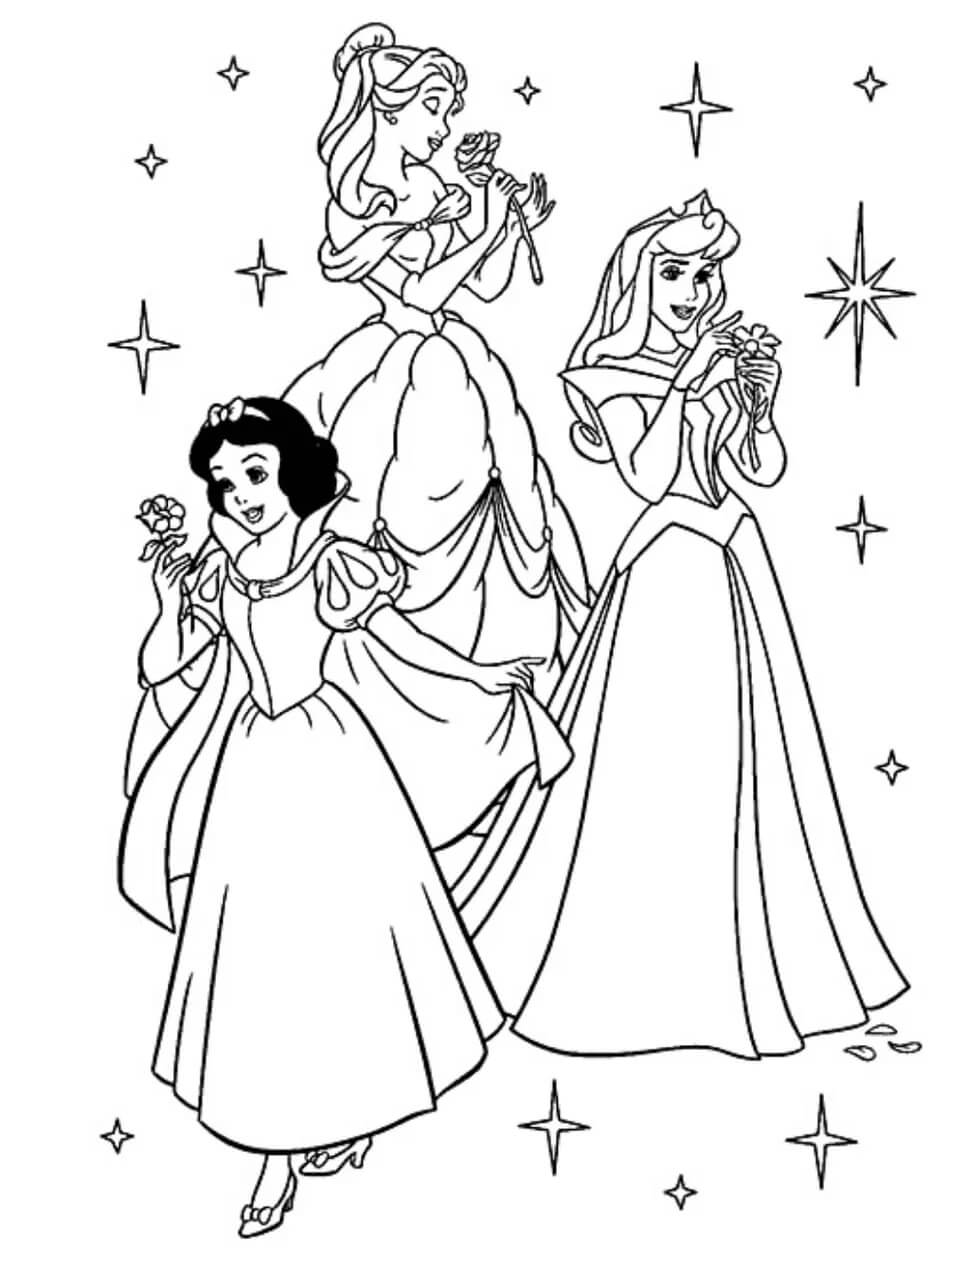 Målarbild Disneyprinsessor